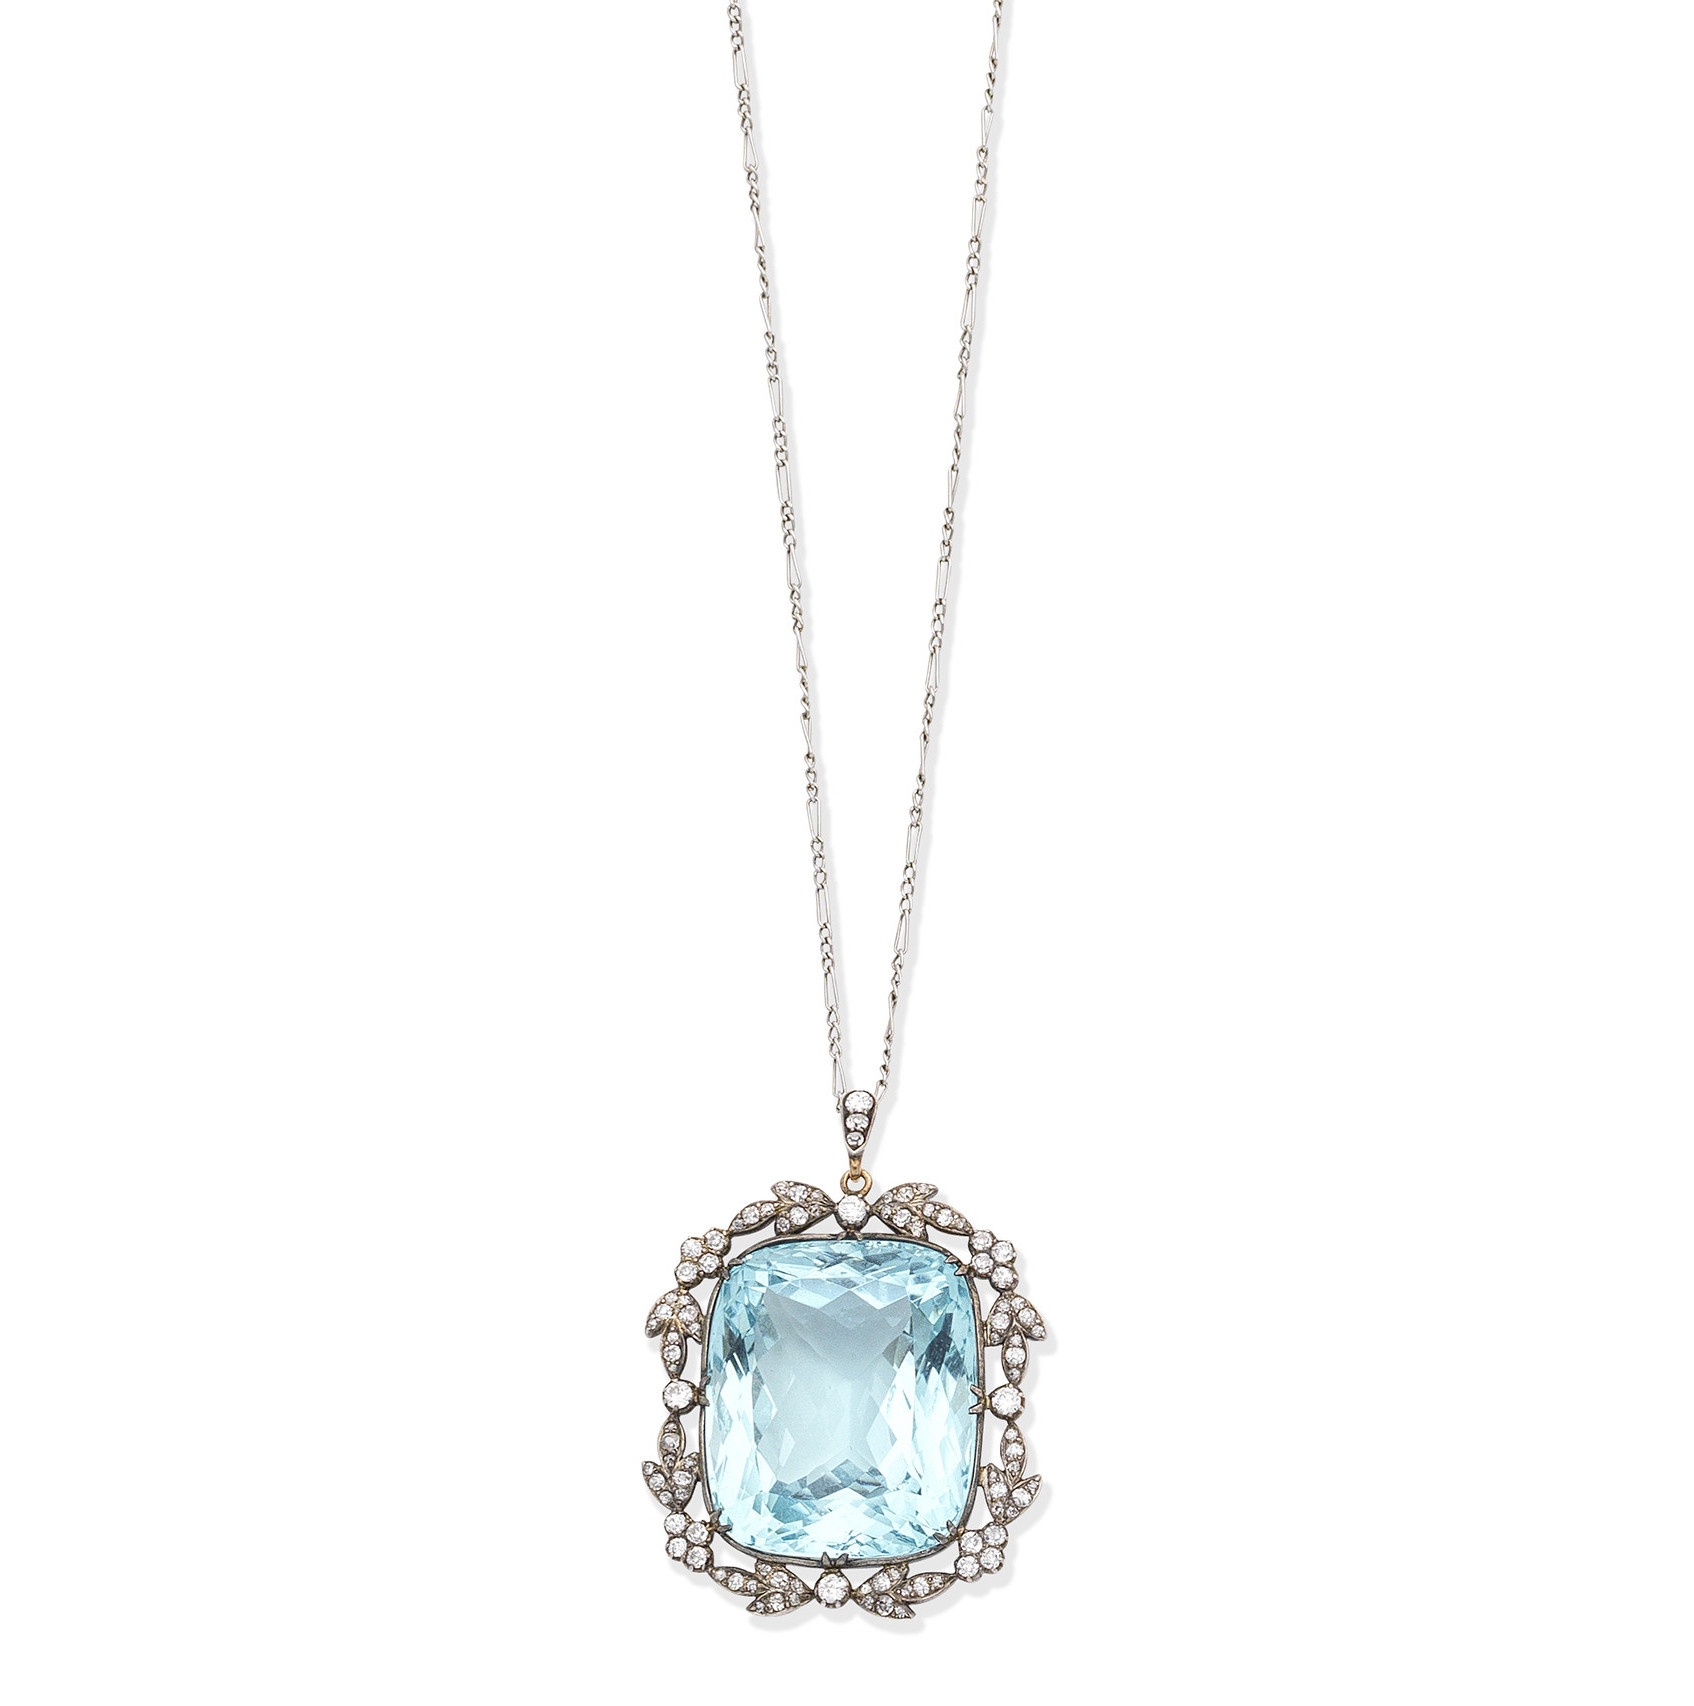 An aquamarine and diamond brooch/pendant,